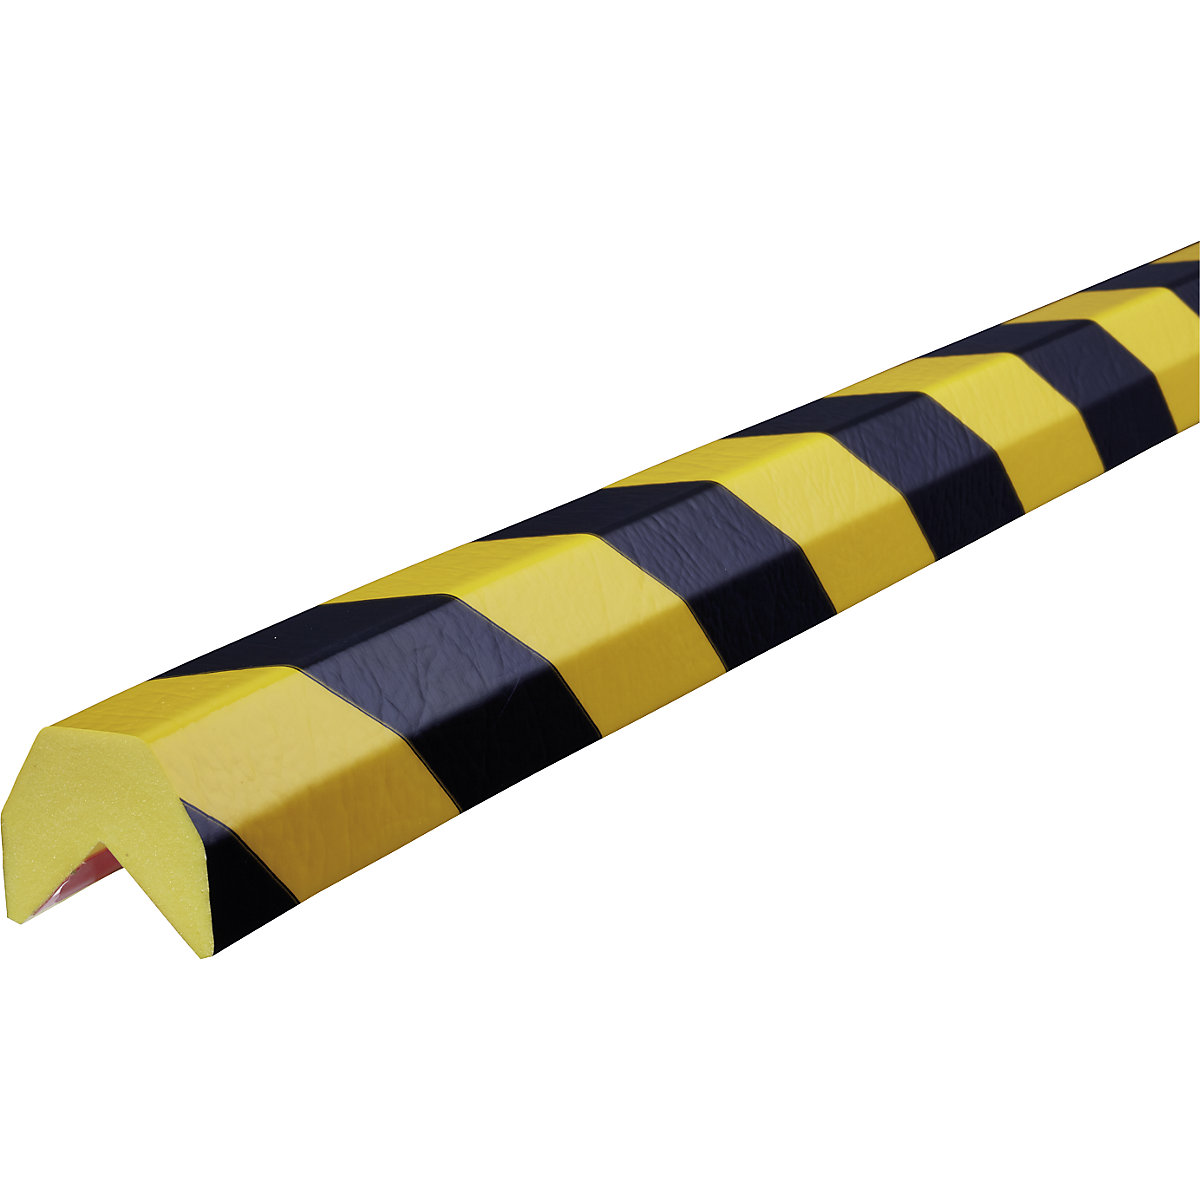 Knuffi® corner protection – SHG, type AA, 1 m piece, black / yellow-10